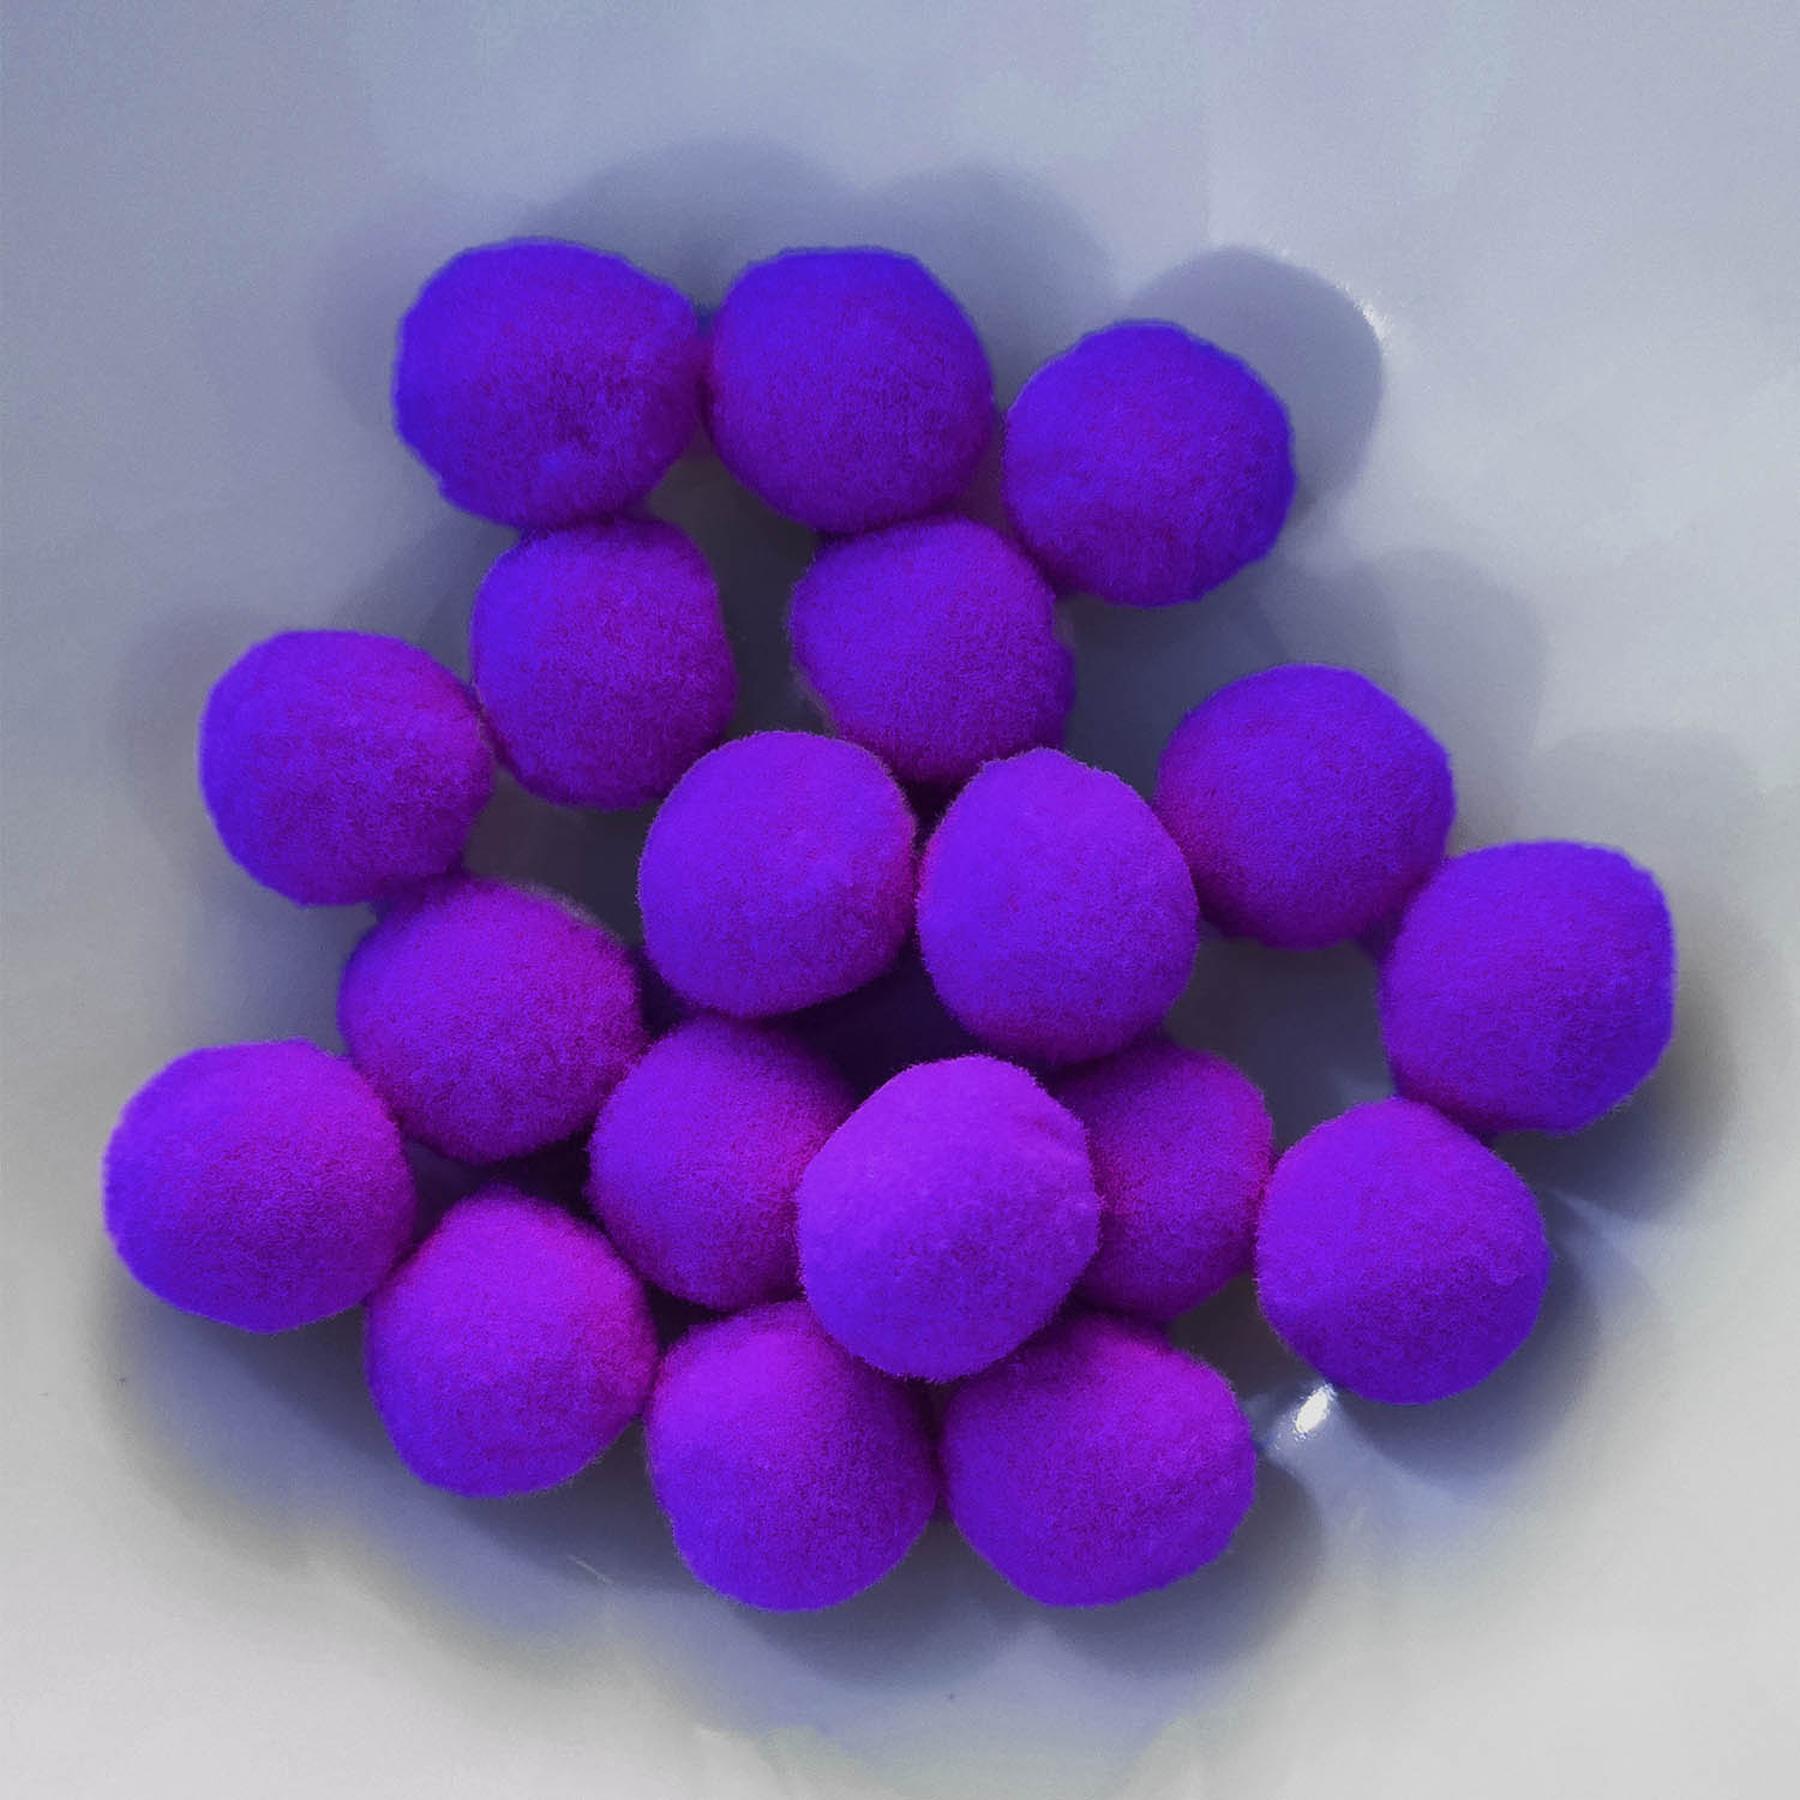 PomPon / Bälle aus Baumwolle - 12 mm / 40er Set - Flieder dunkel